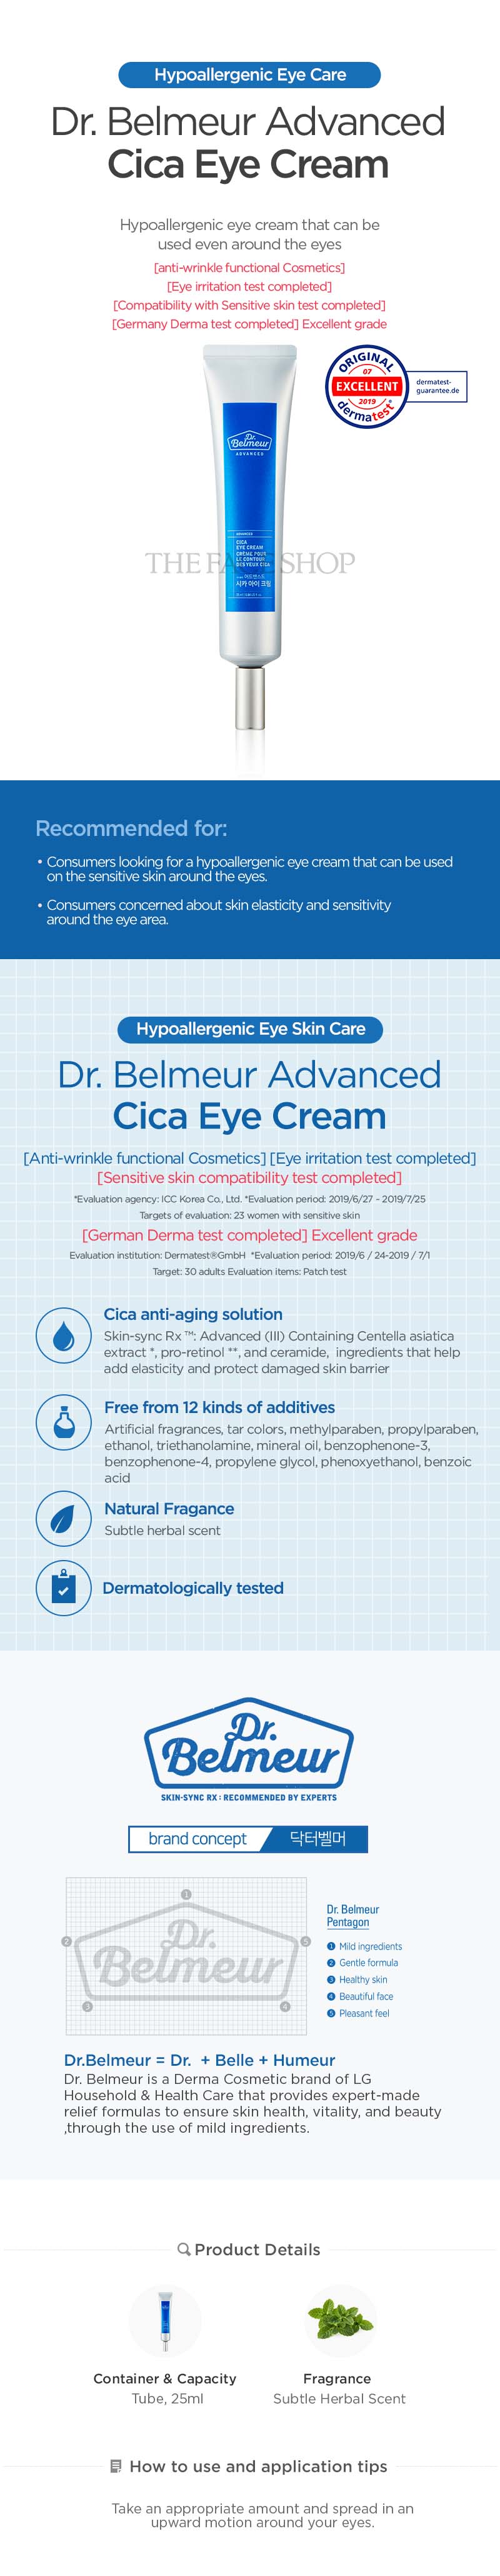 Dr Belmeur Advanced Cica Eye Cream